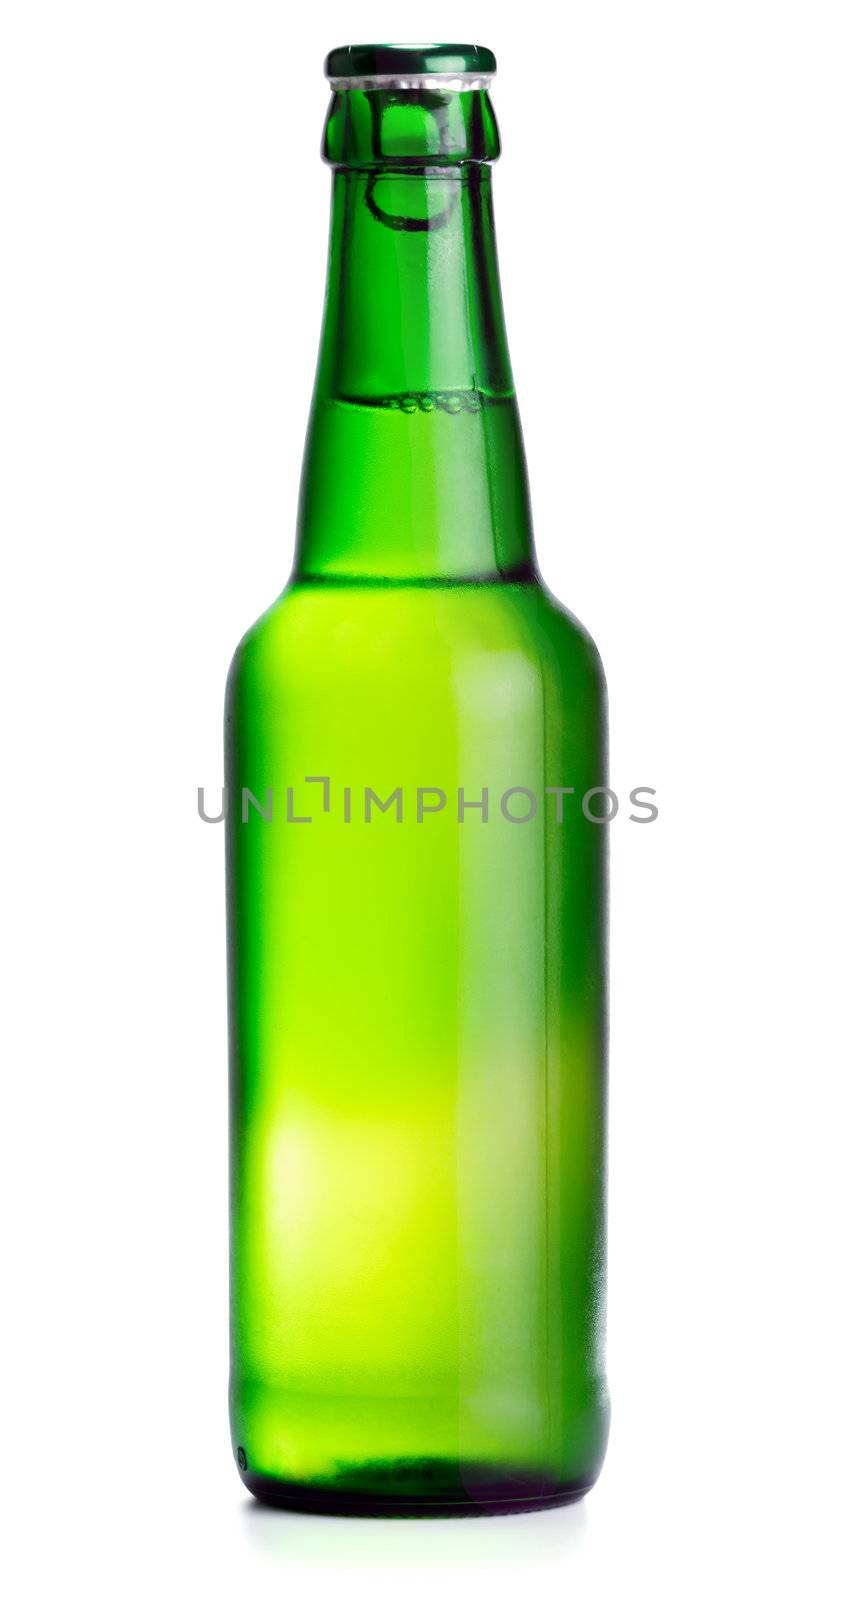 Beer bottle isolated on white by Bedolaga